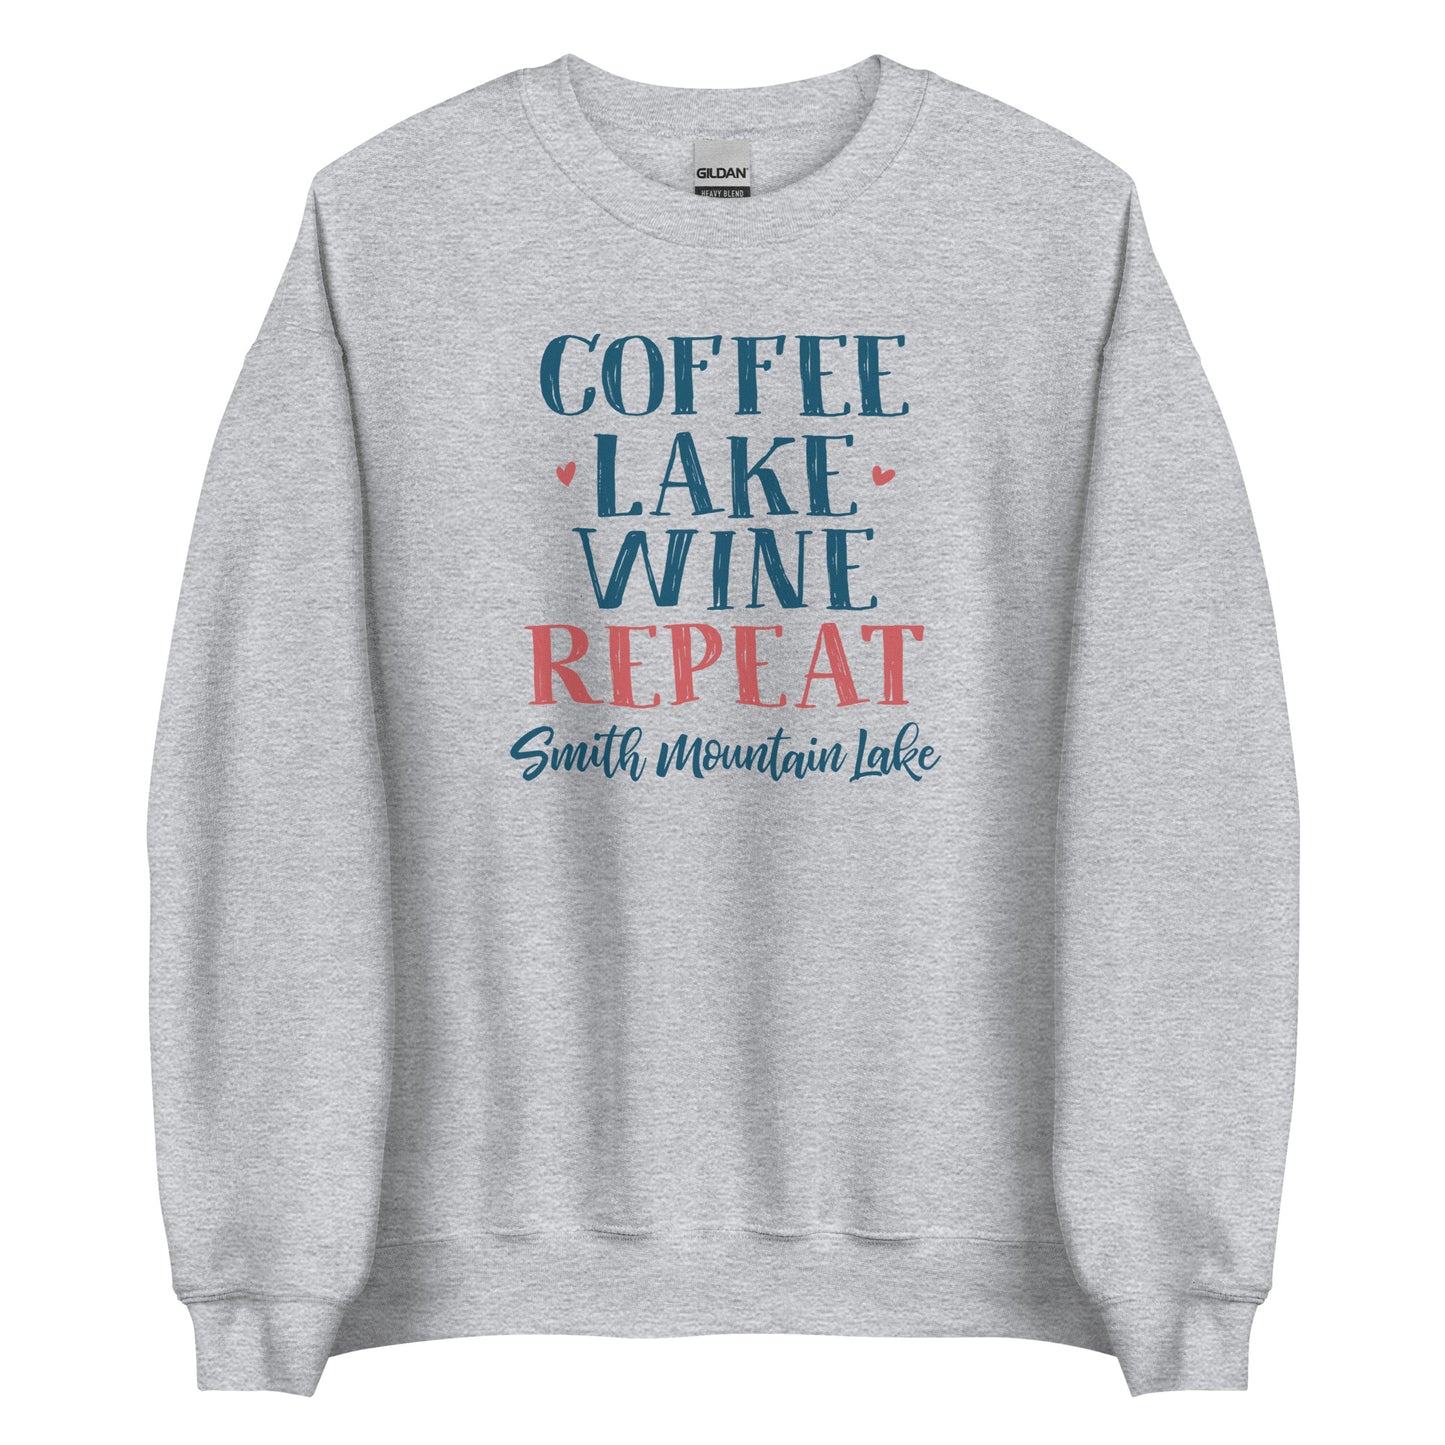 Coffee Lake Wine Repeat - Smith Mountain Lake, VA Unisex Crewneck Sweatshirt